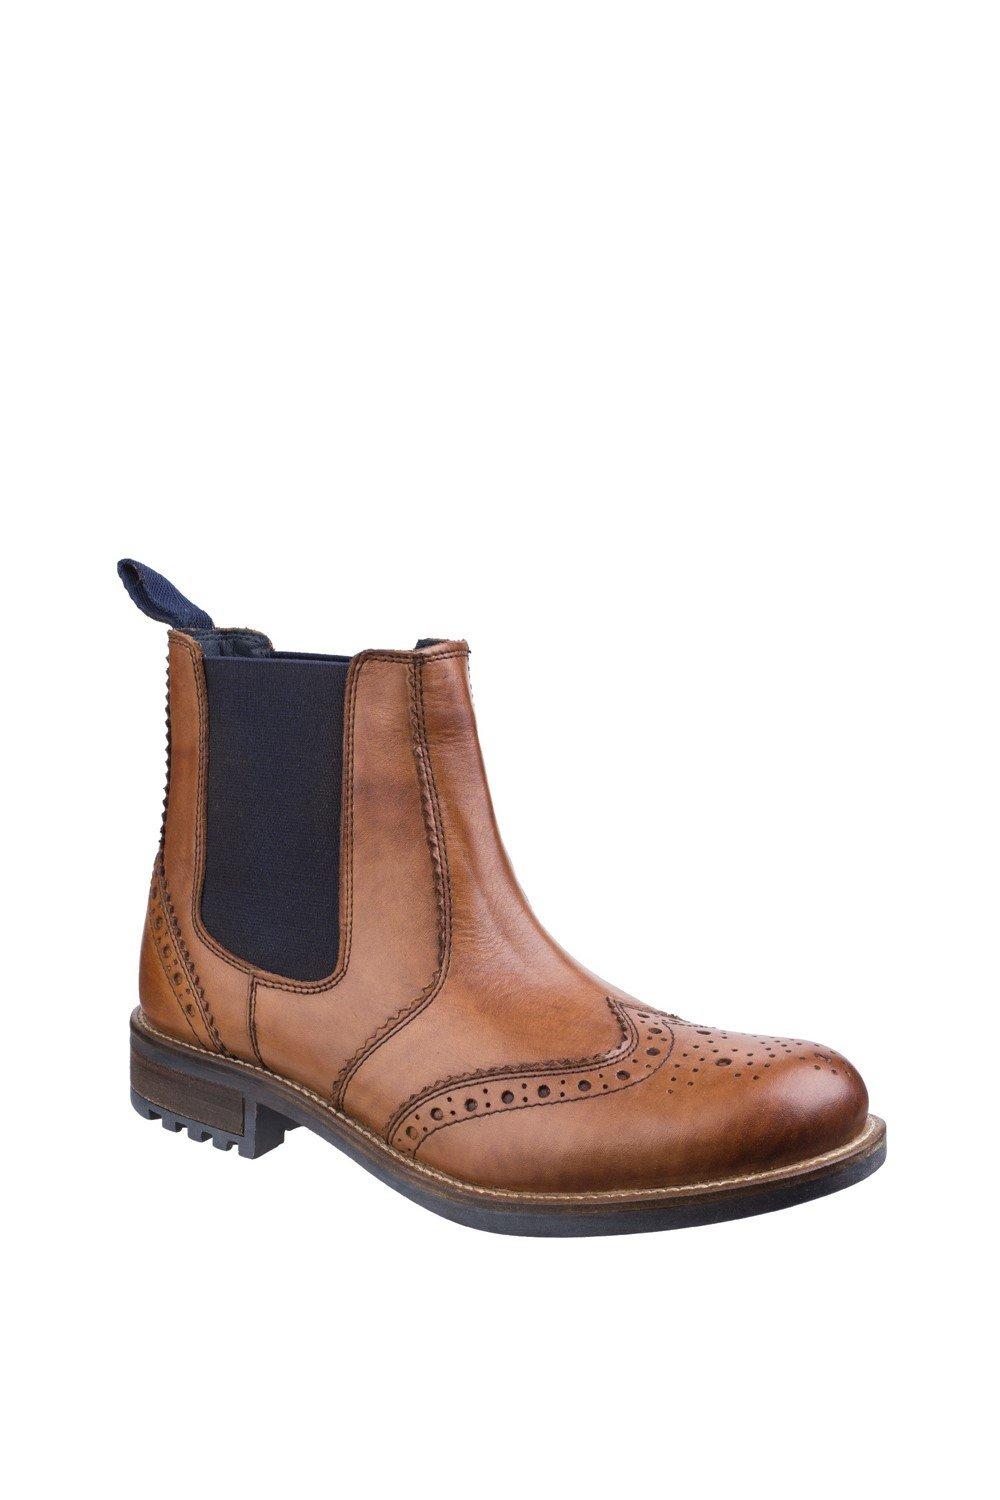 Кожаные ботинки 'Cirencester' Cotswold, коричневый